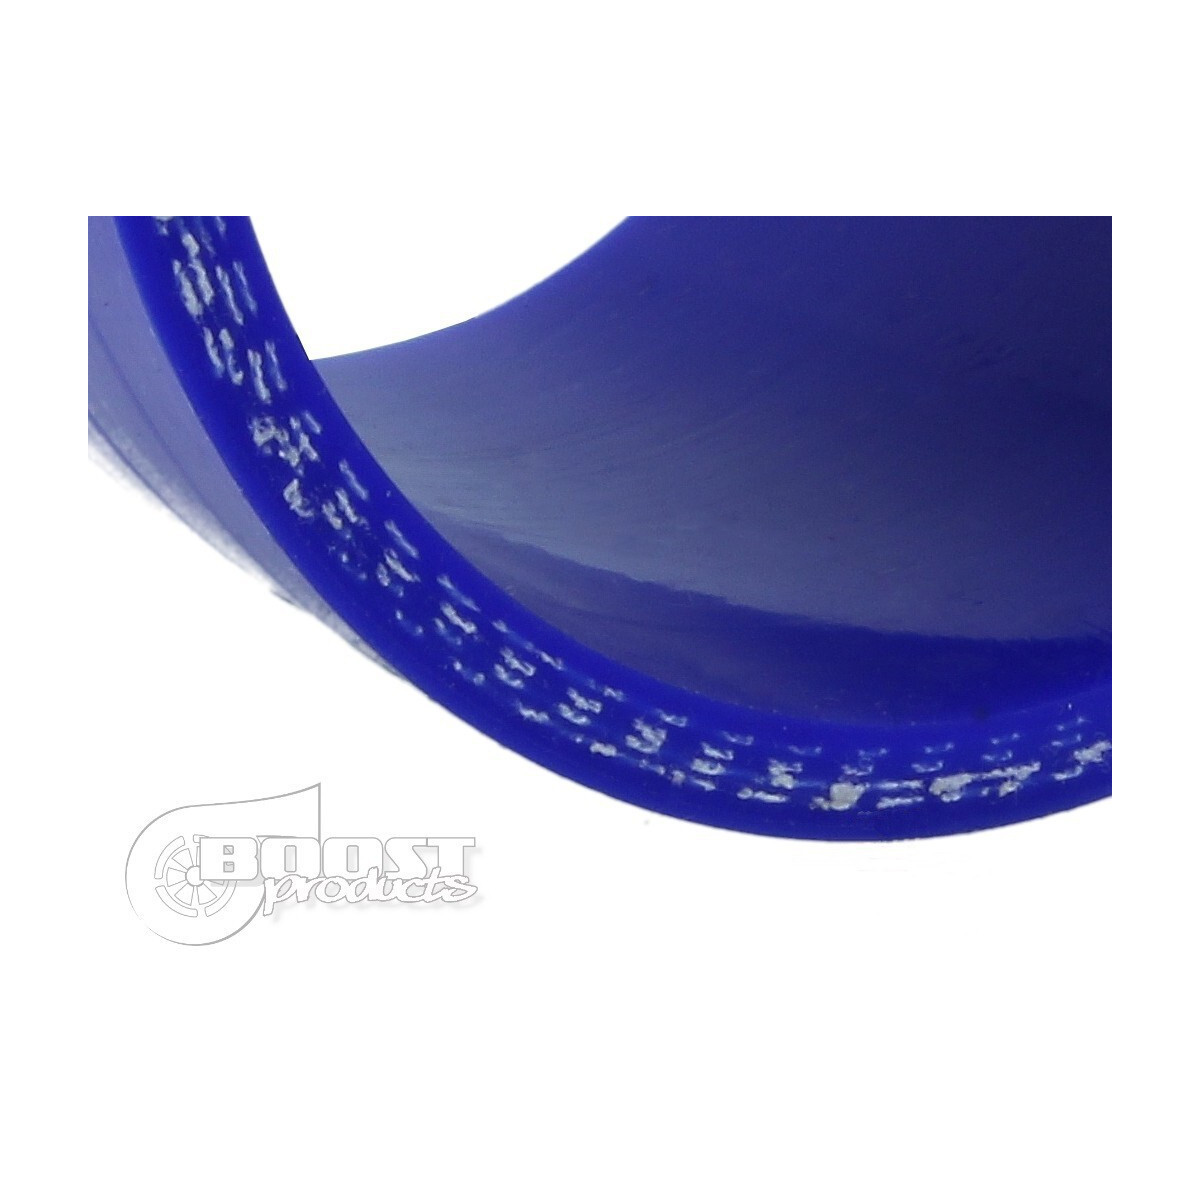 BOOST products Silikonbogen 90°, 45mm, blau